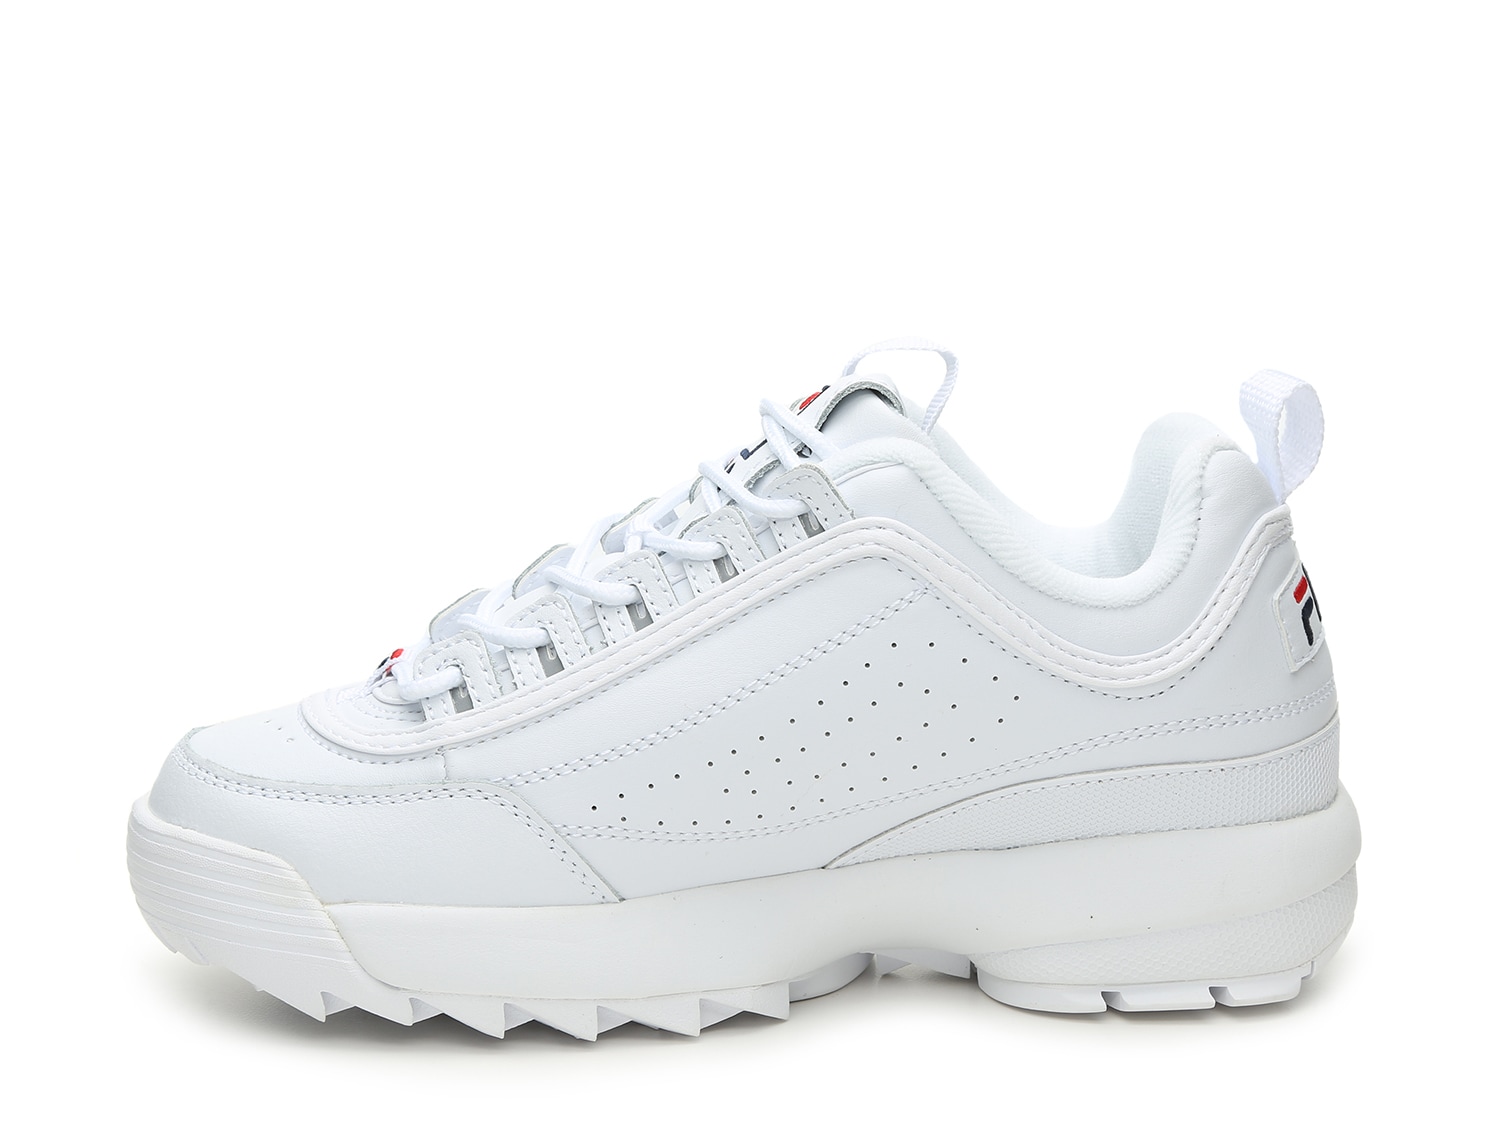 Fila Disruptor II Premium Sneaker - Women's | DSW